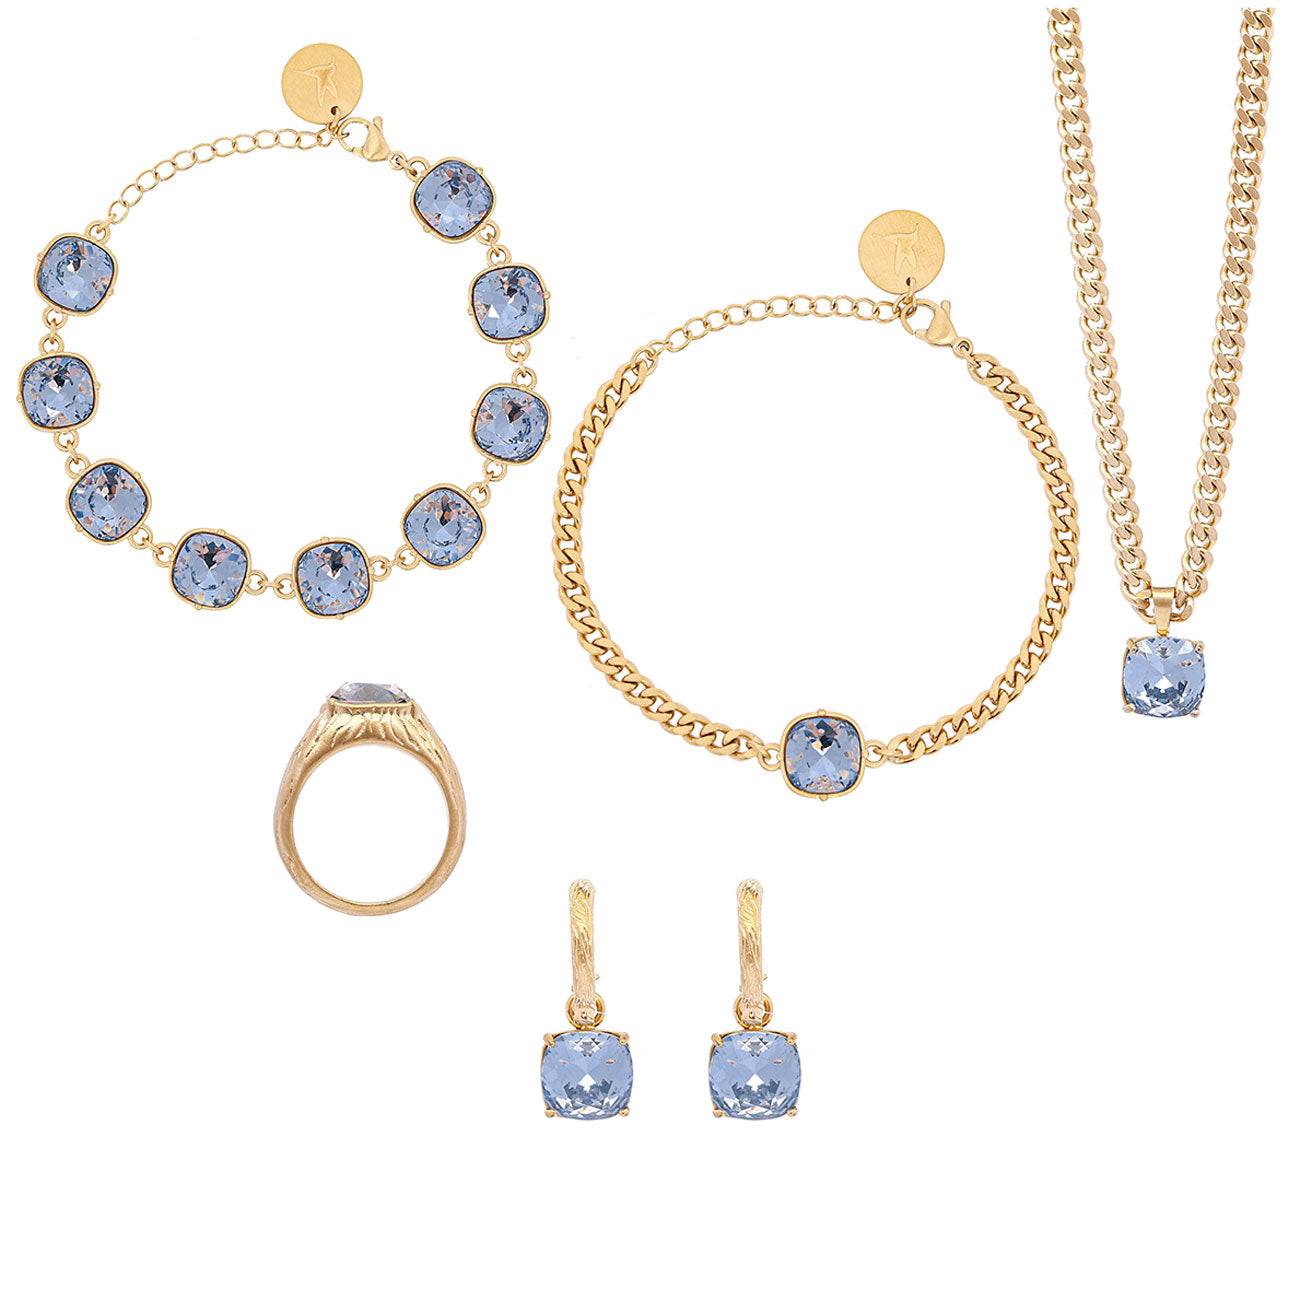 Carla Swarovski chain necklace - Denim blue